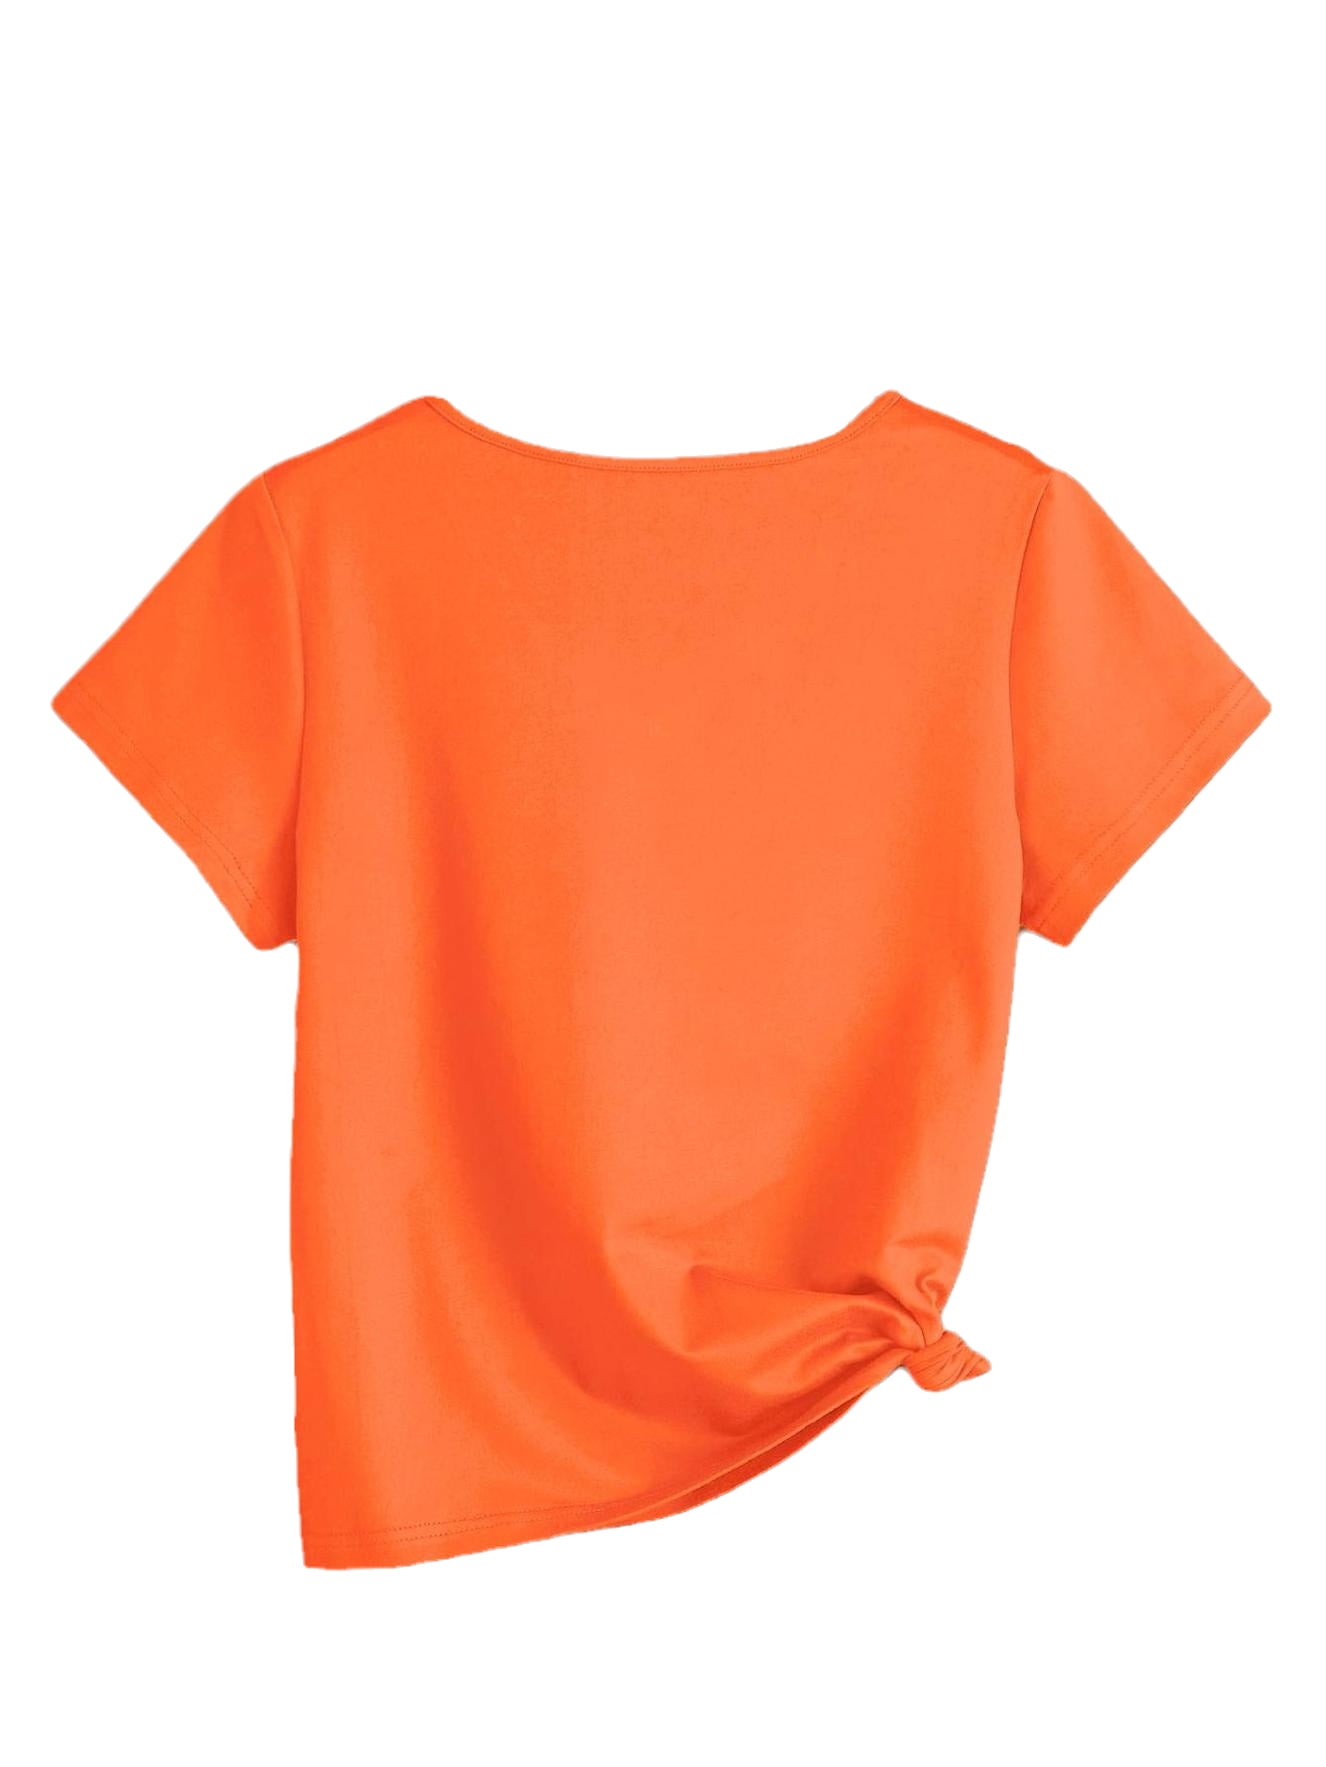 Chicos* Orange Print Size X Large Ladies Casual Shirts